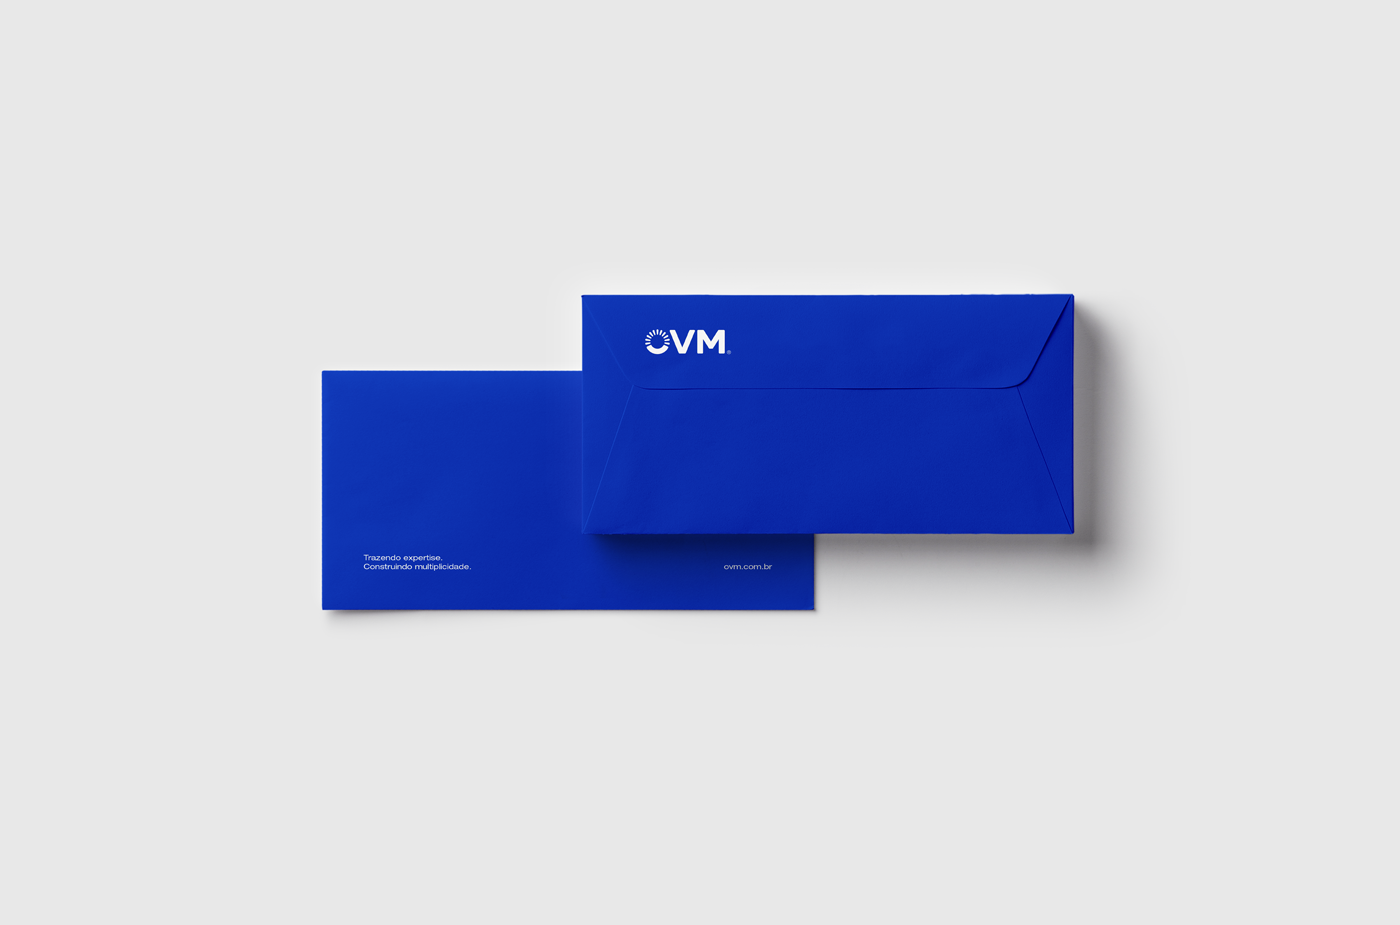 brand identidade visual identity imóveis Investment logo OVM properties Technology tecnologia